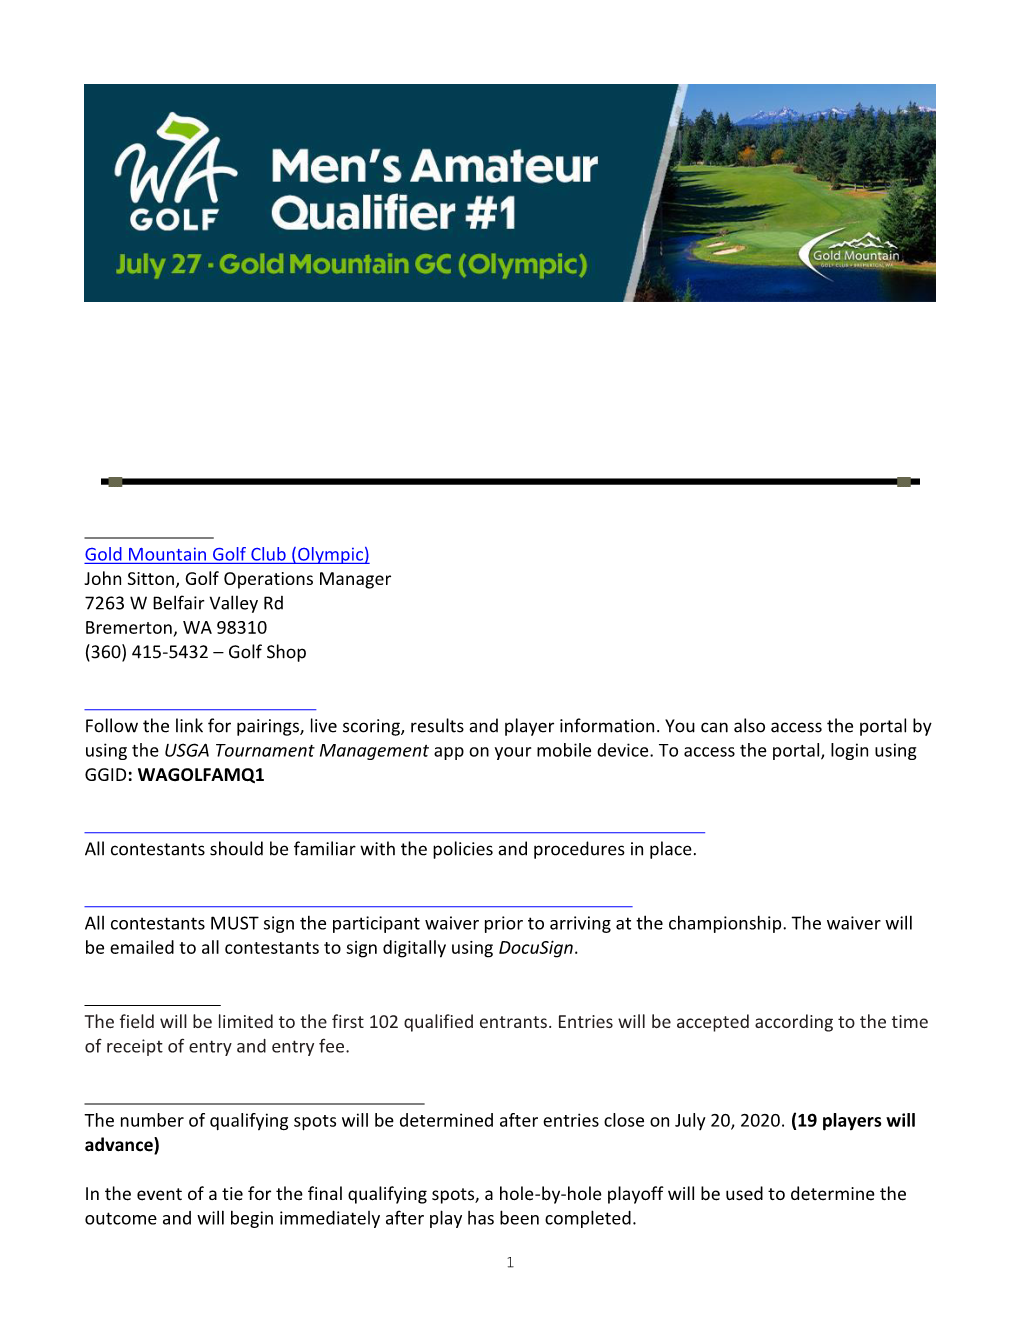 Gold Mountain Golf Club (Olympic) John Sitton, Golf Operations Manager 7263 W Belfair Valley Rd Bremerton, WA 98310 (360) 415-5432 – Golf Shop